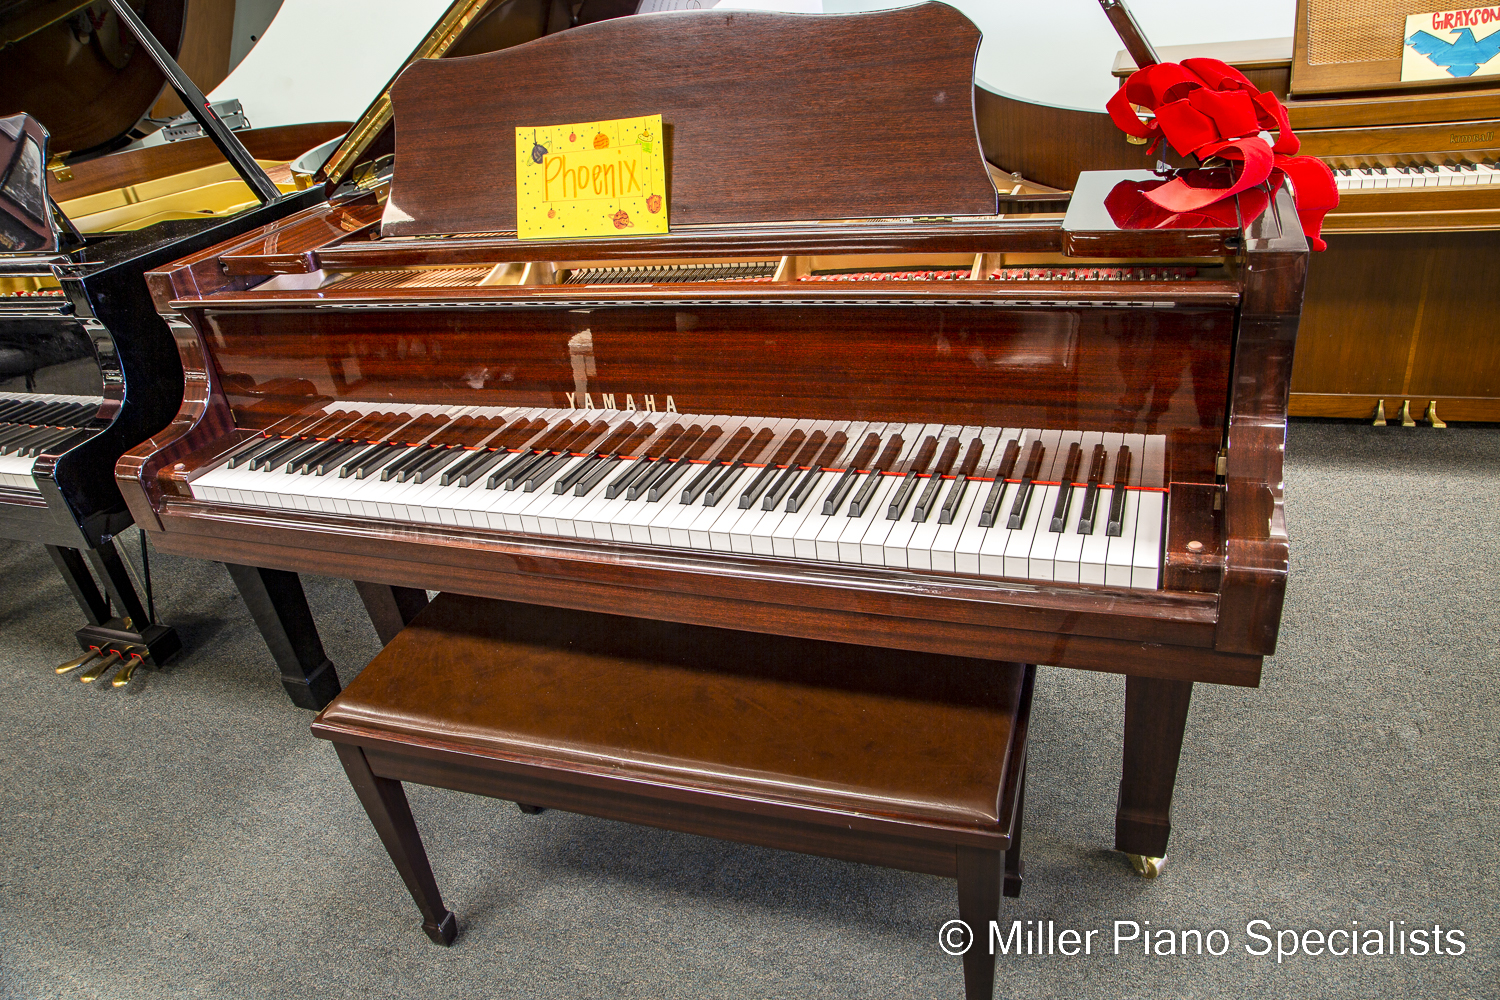 Sold Yamaha C2 Miller Piano Specialists Nashvilles Home Of Yamaha